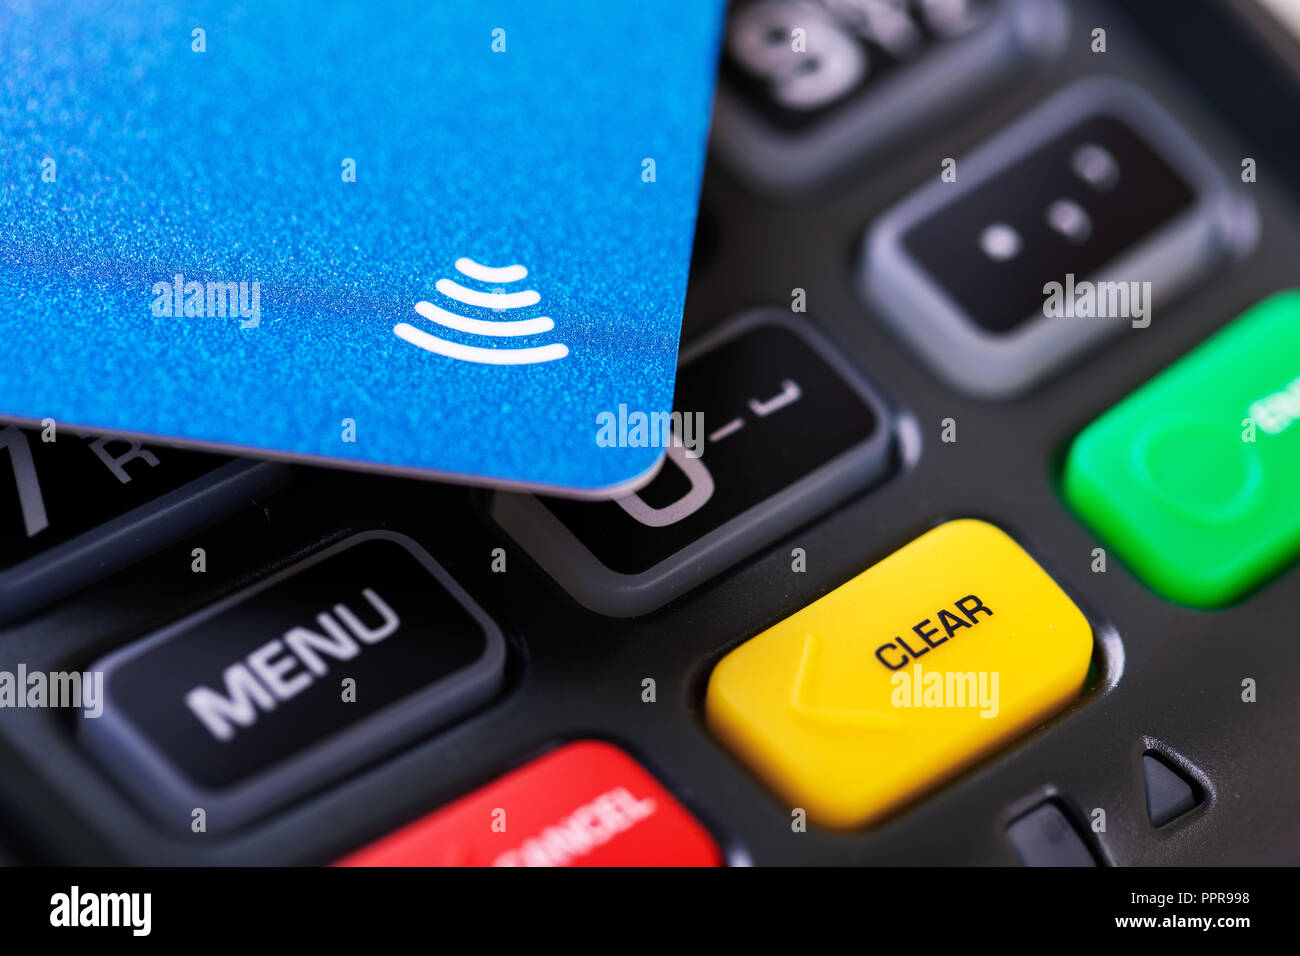 Kontaktloses Bezahlen - NFC-Kreditkarte auf Transaktion Terminal Stockfoto